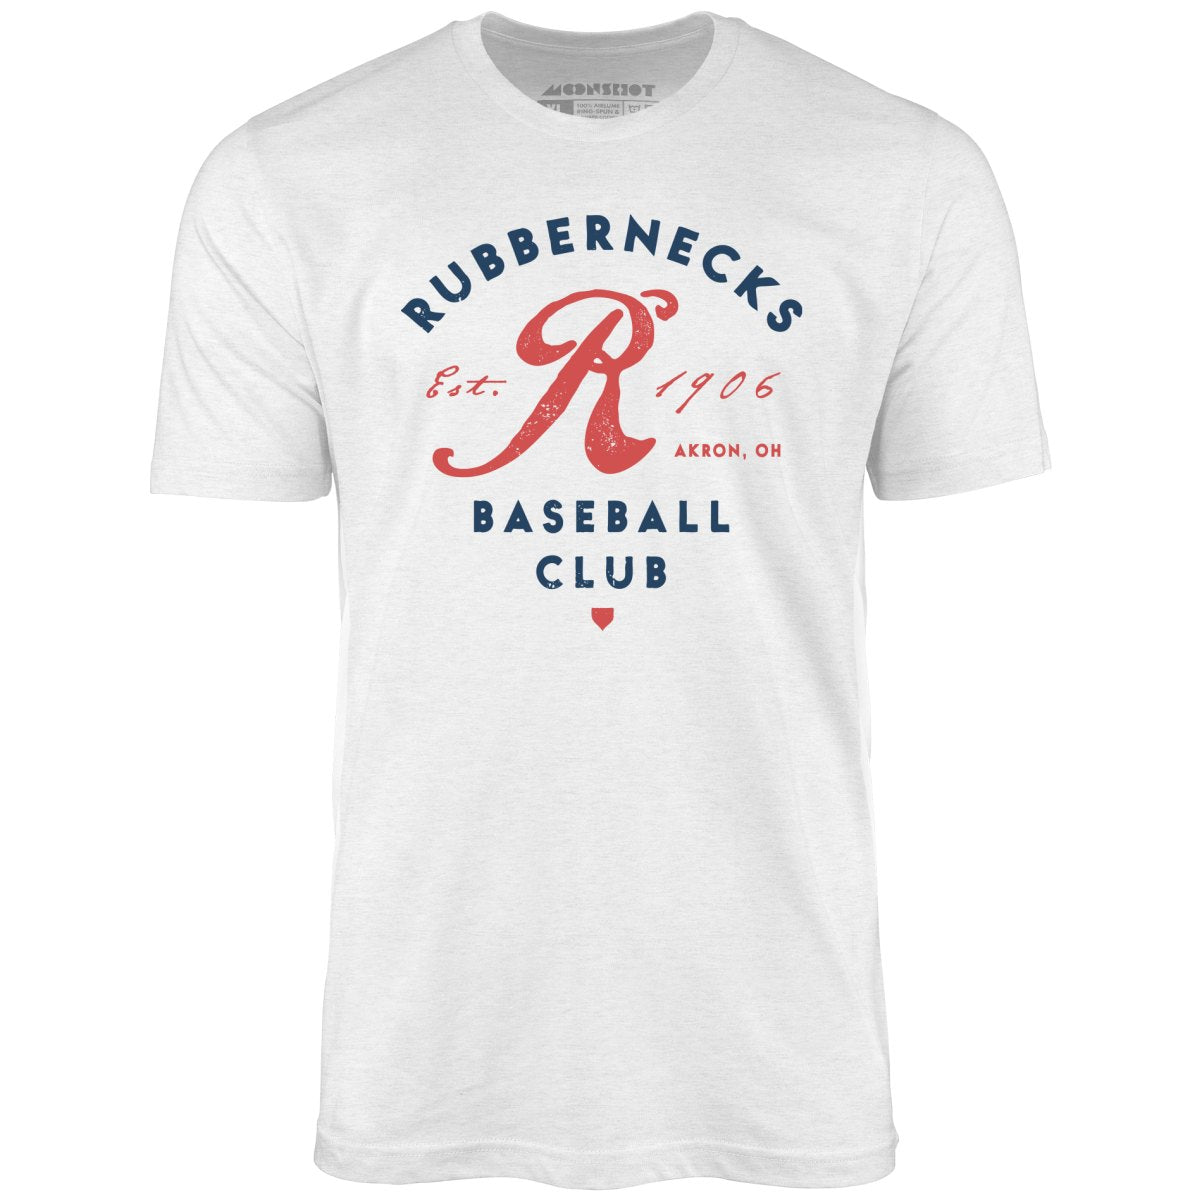 Akron Rubbernecks - Ohio - Vintage Defunct Baseball Teams - Unisex T-Shirt